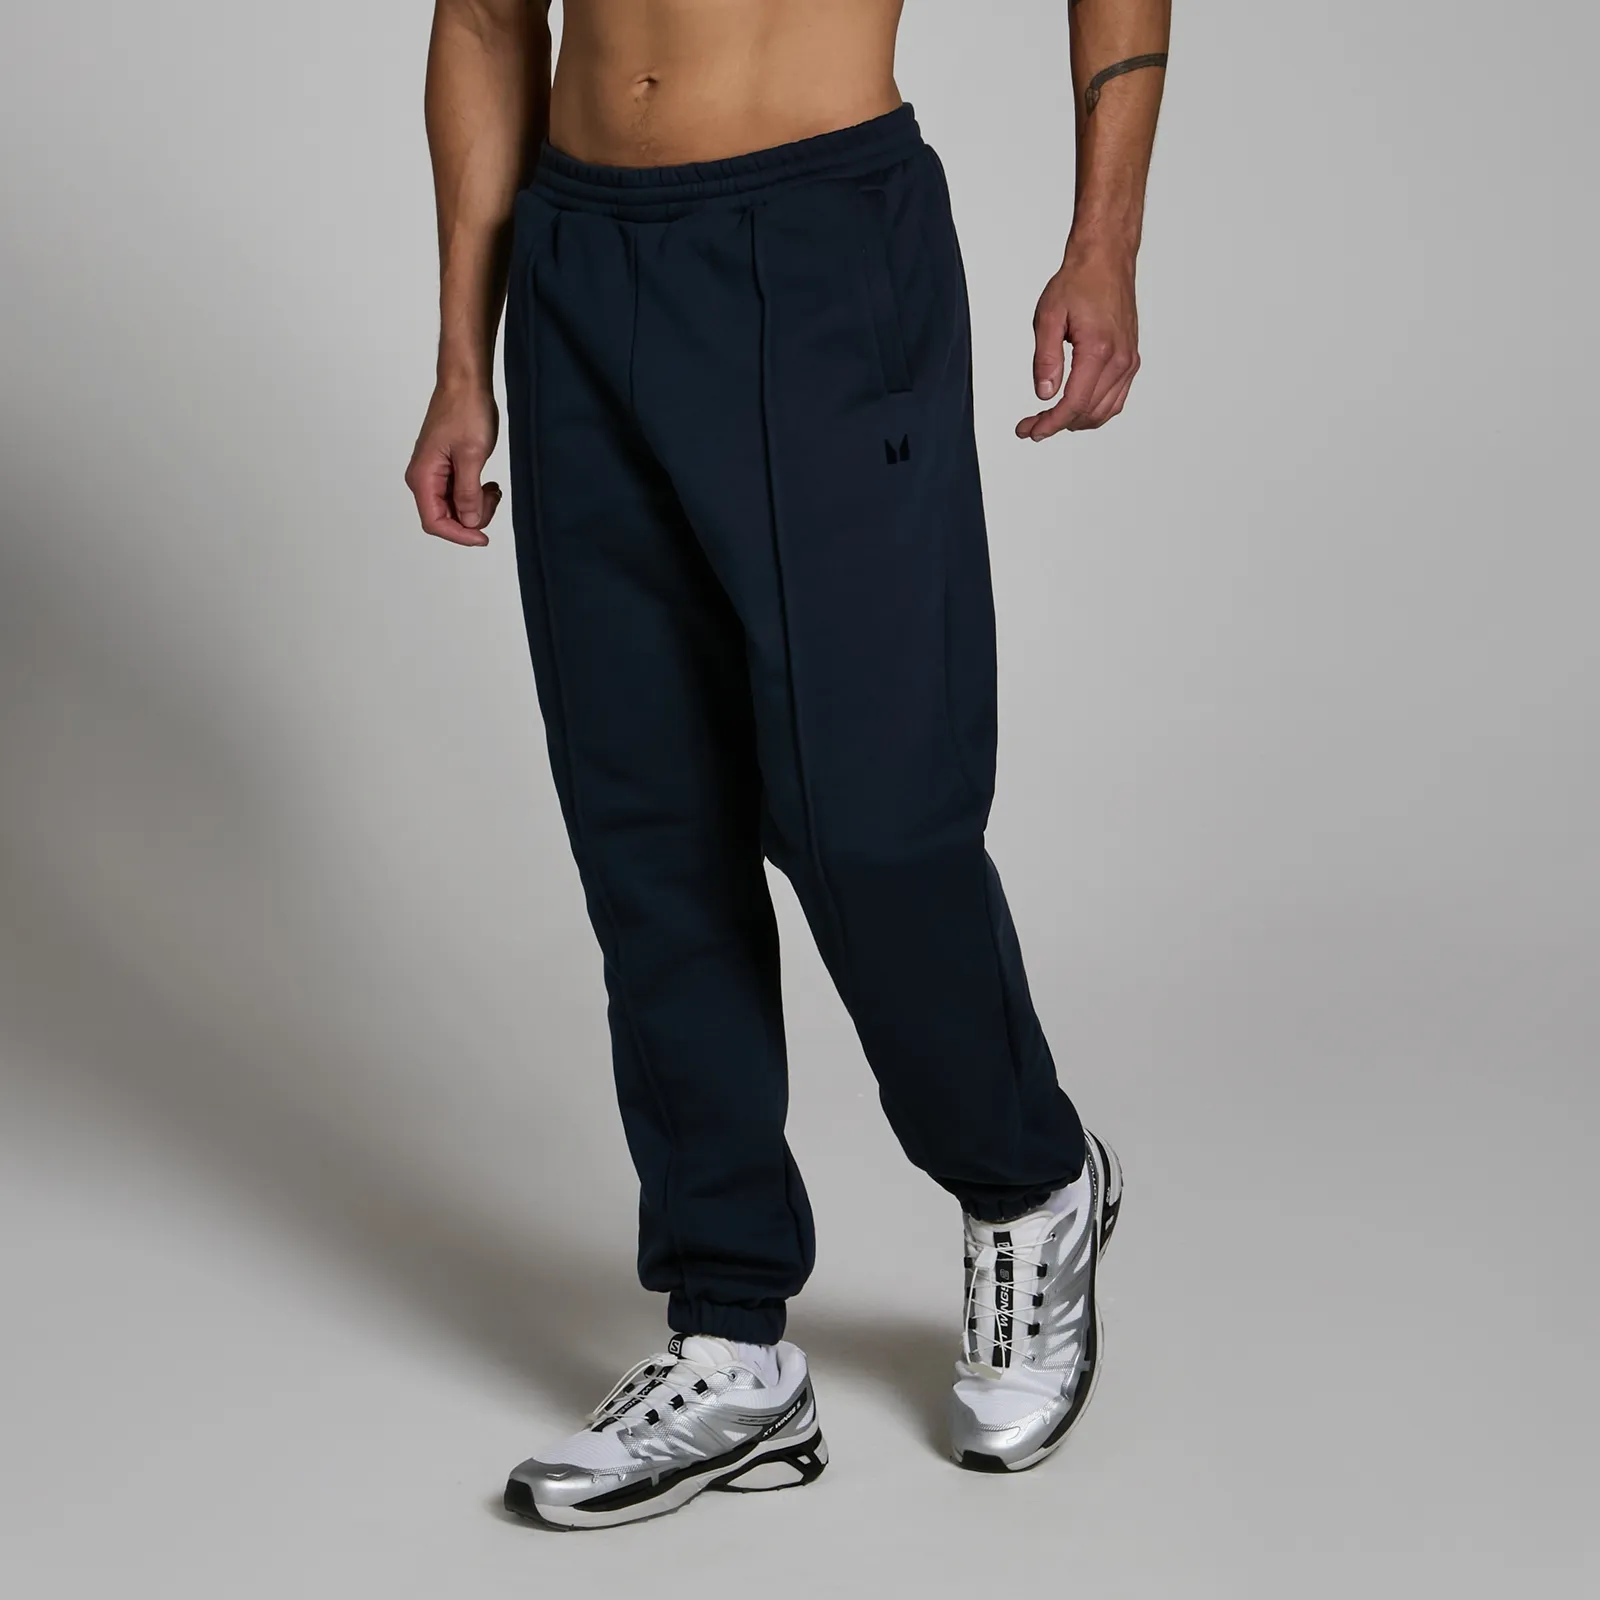 Pantaloni da jogging pesanti oversize  Lifestyle da uomo - Blu navy scuro - S